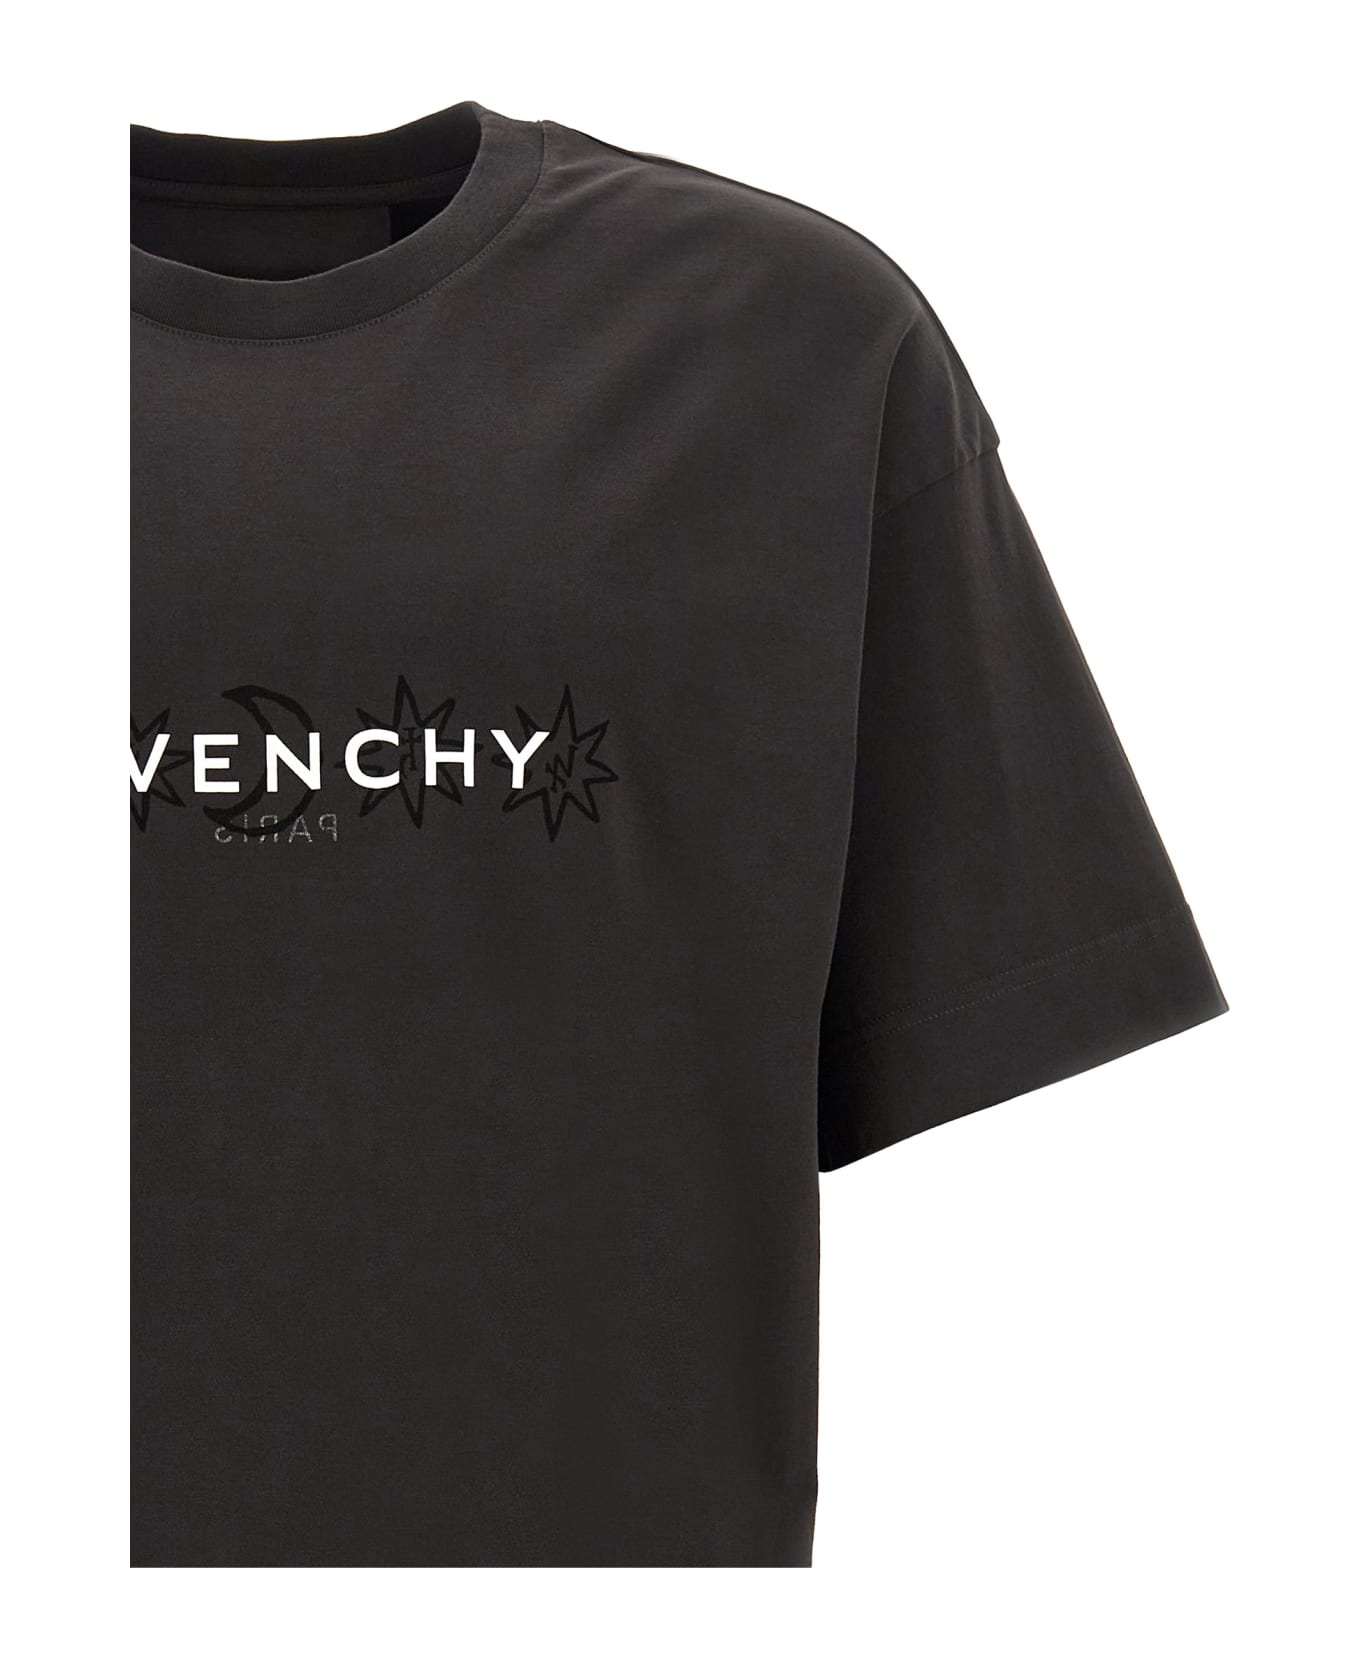 Givenchy Printed T-shirt - Rosewood